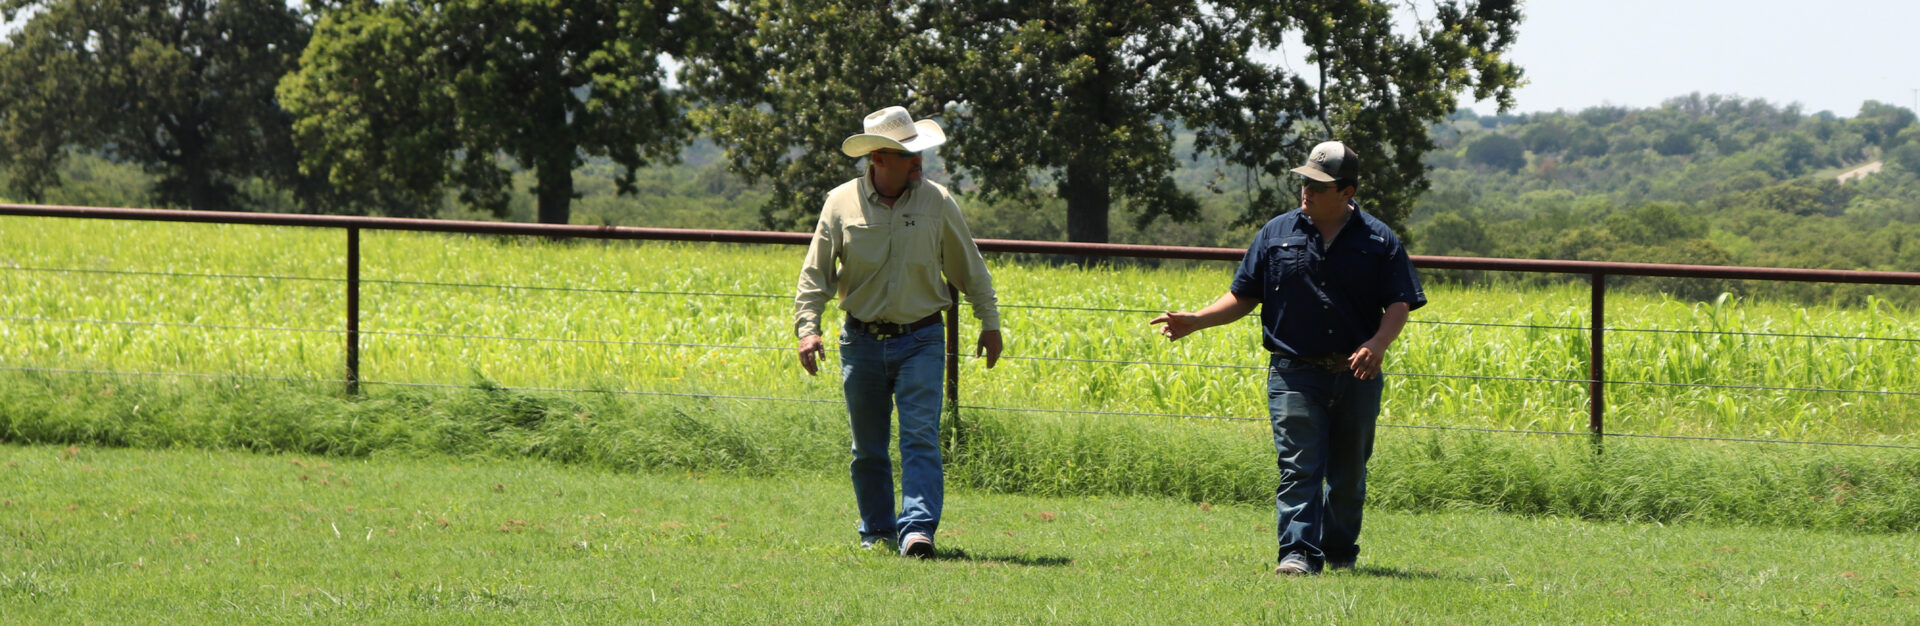 Two ranchers walking in a field of grass